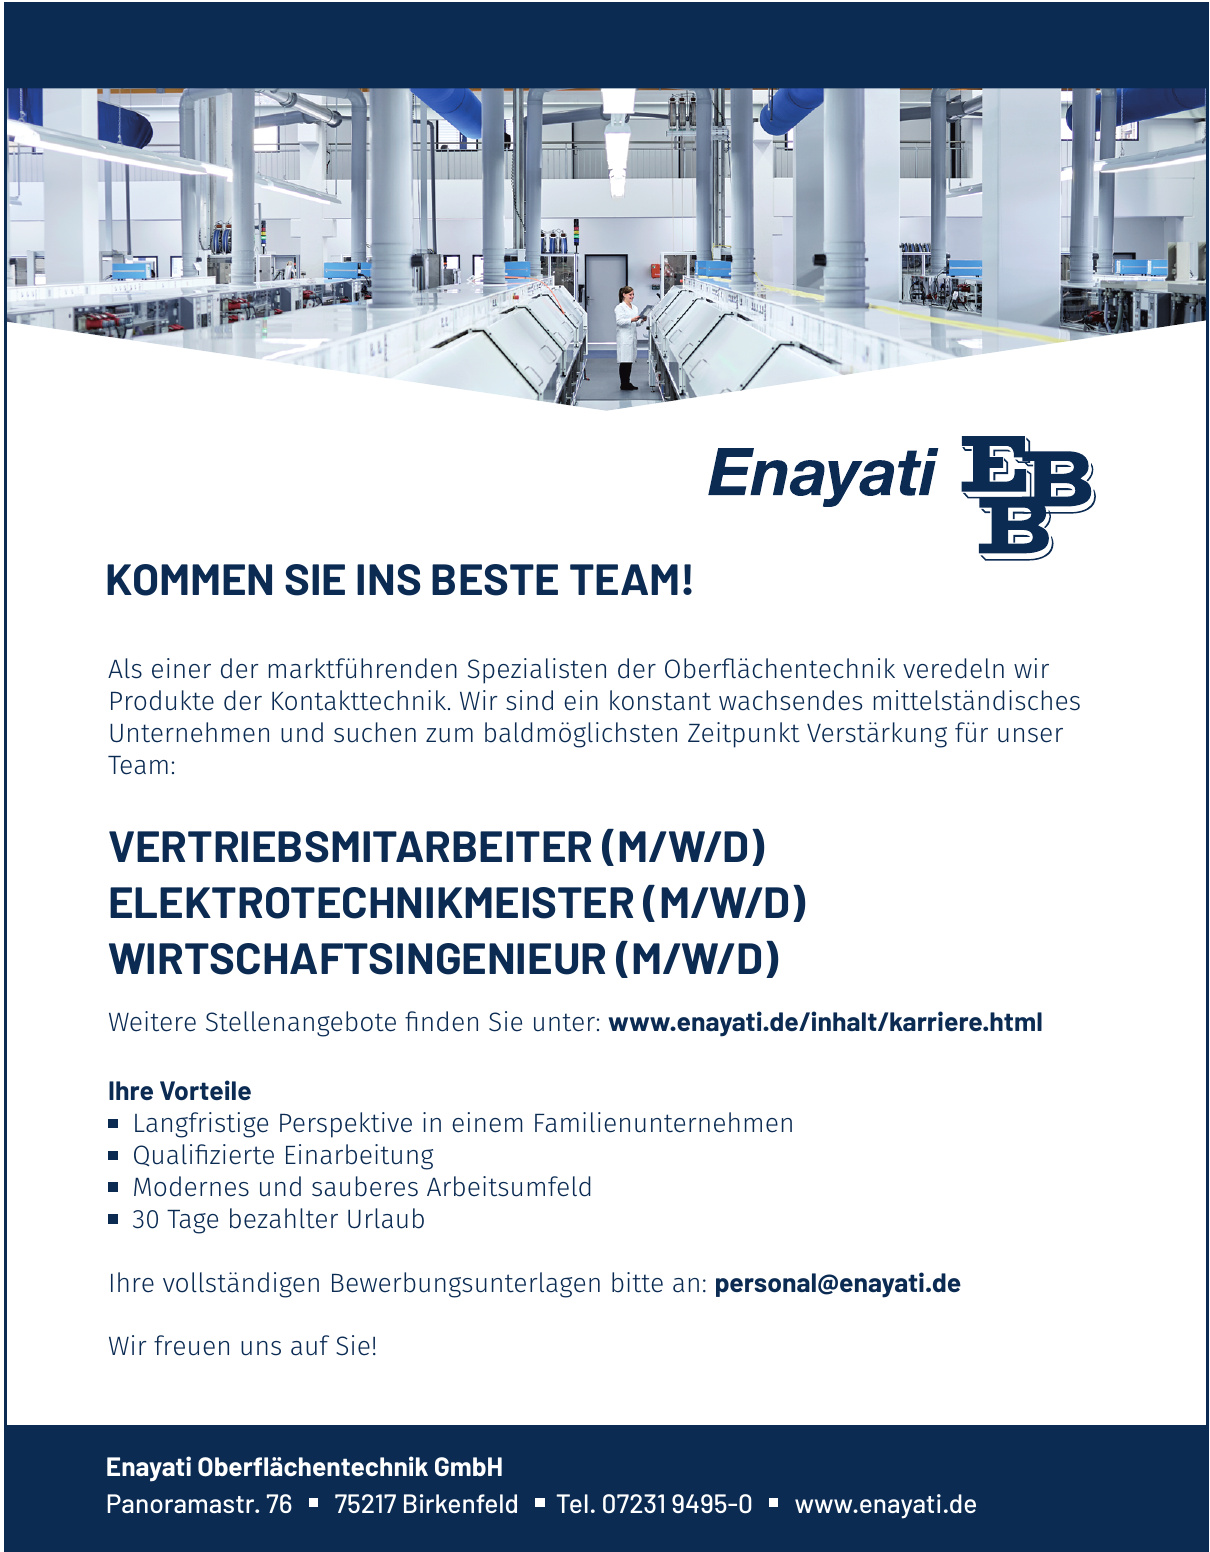 Enayati Oberflächentechnik GmbH